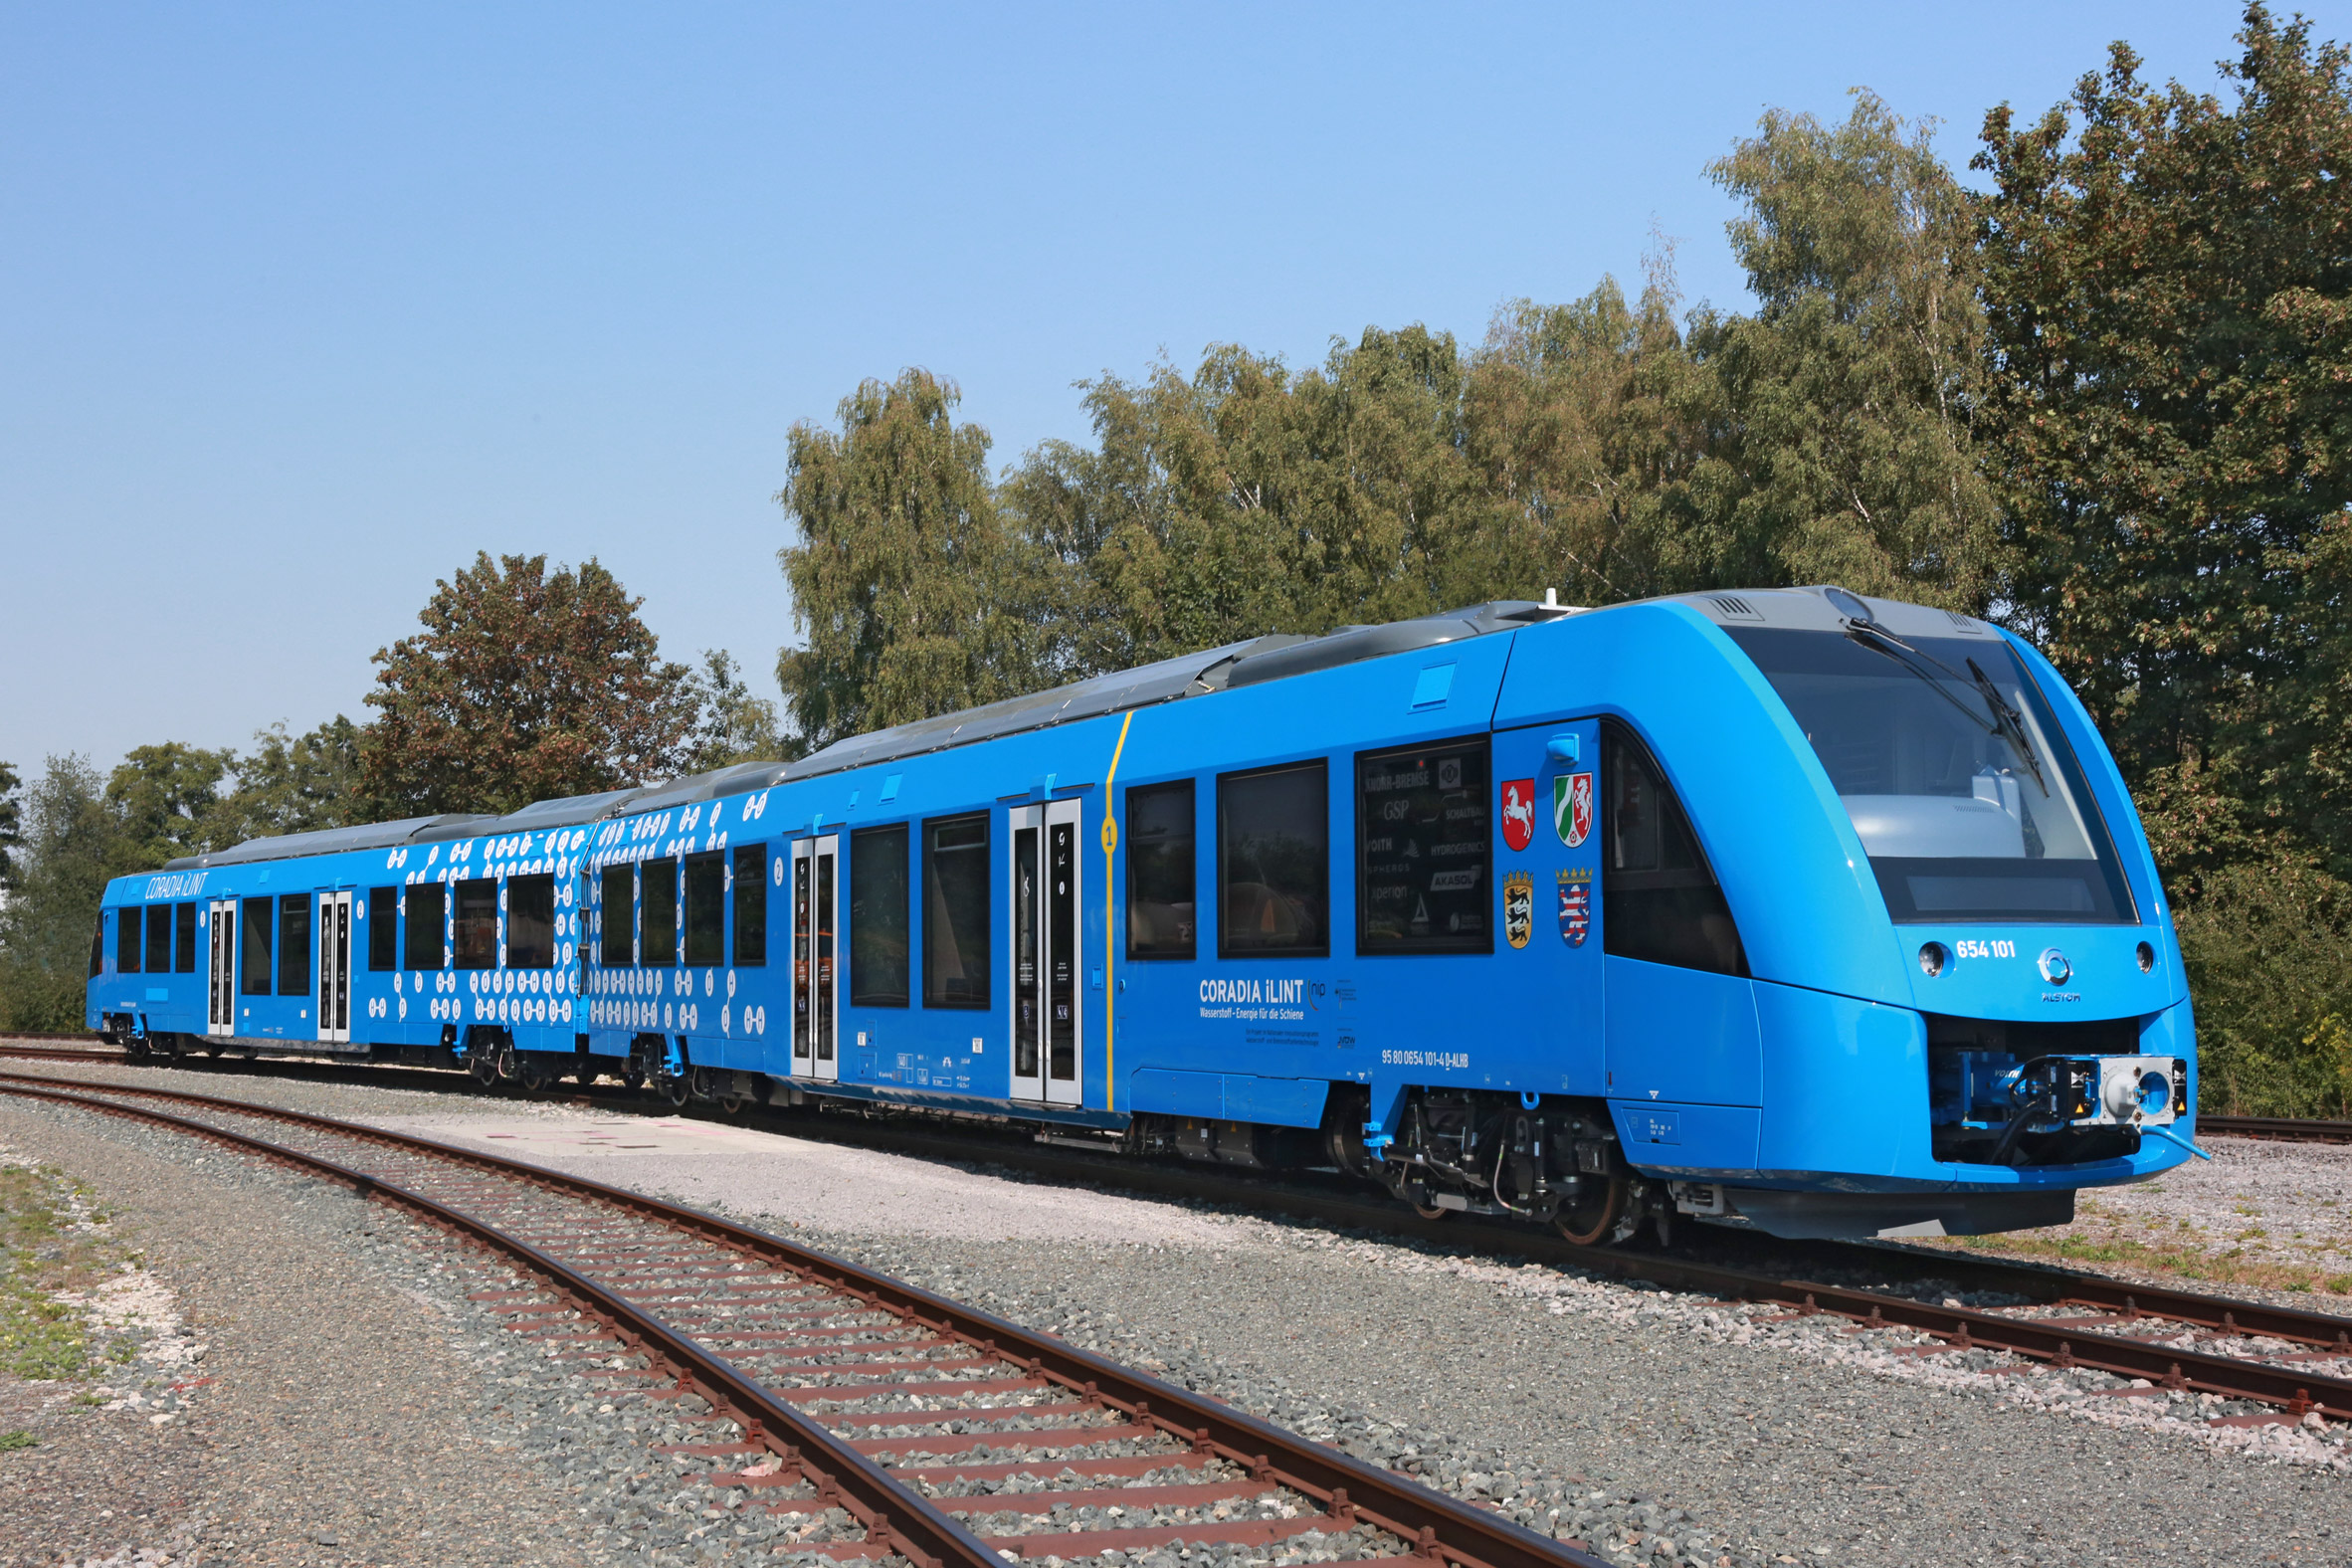 hydroen-fuelled-train-news-design-germany_dezeen_2364_col_4